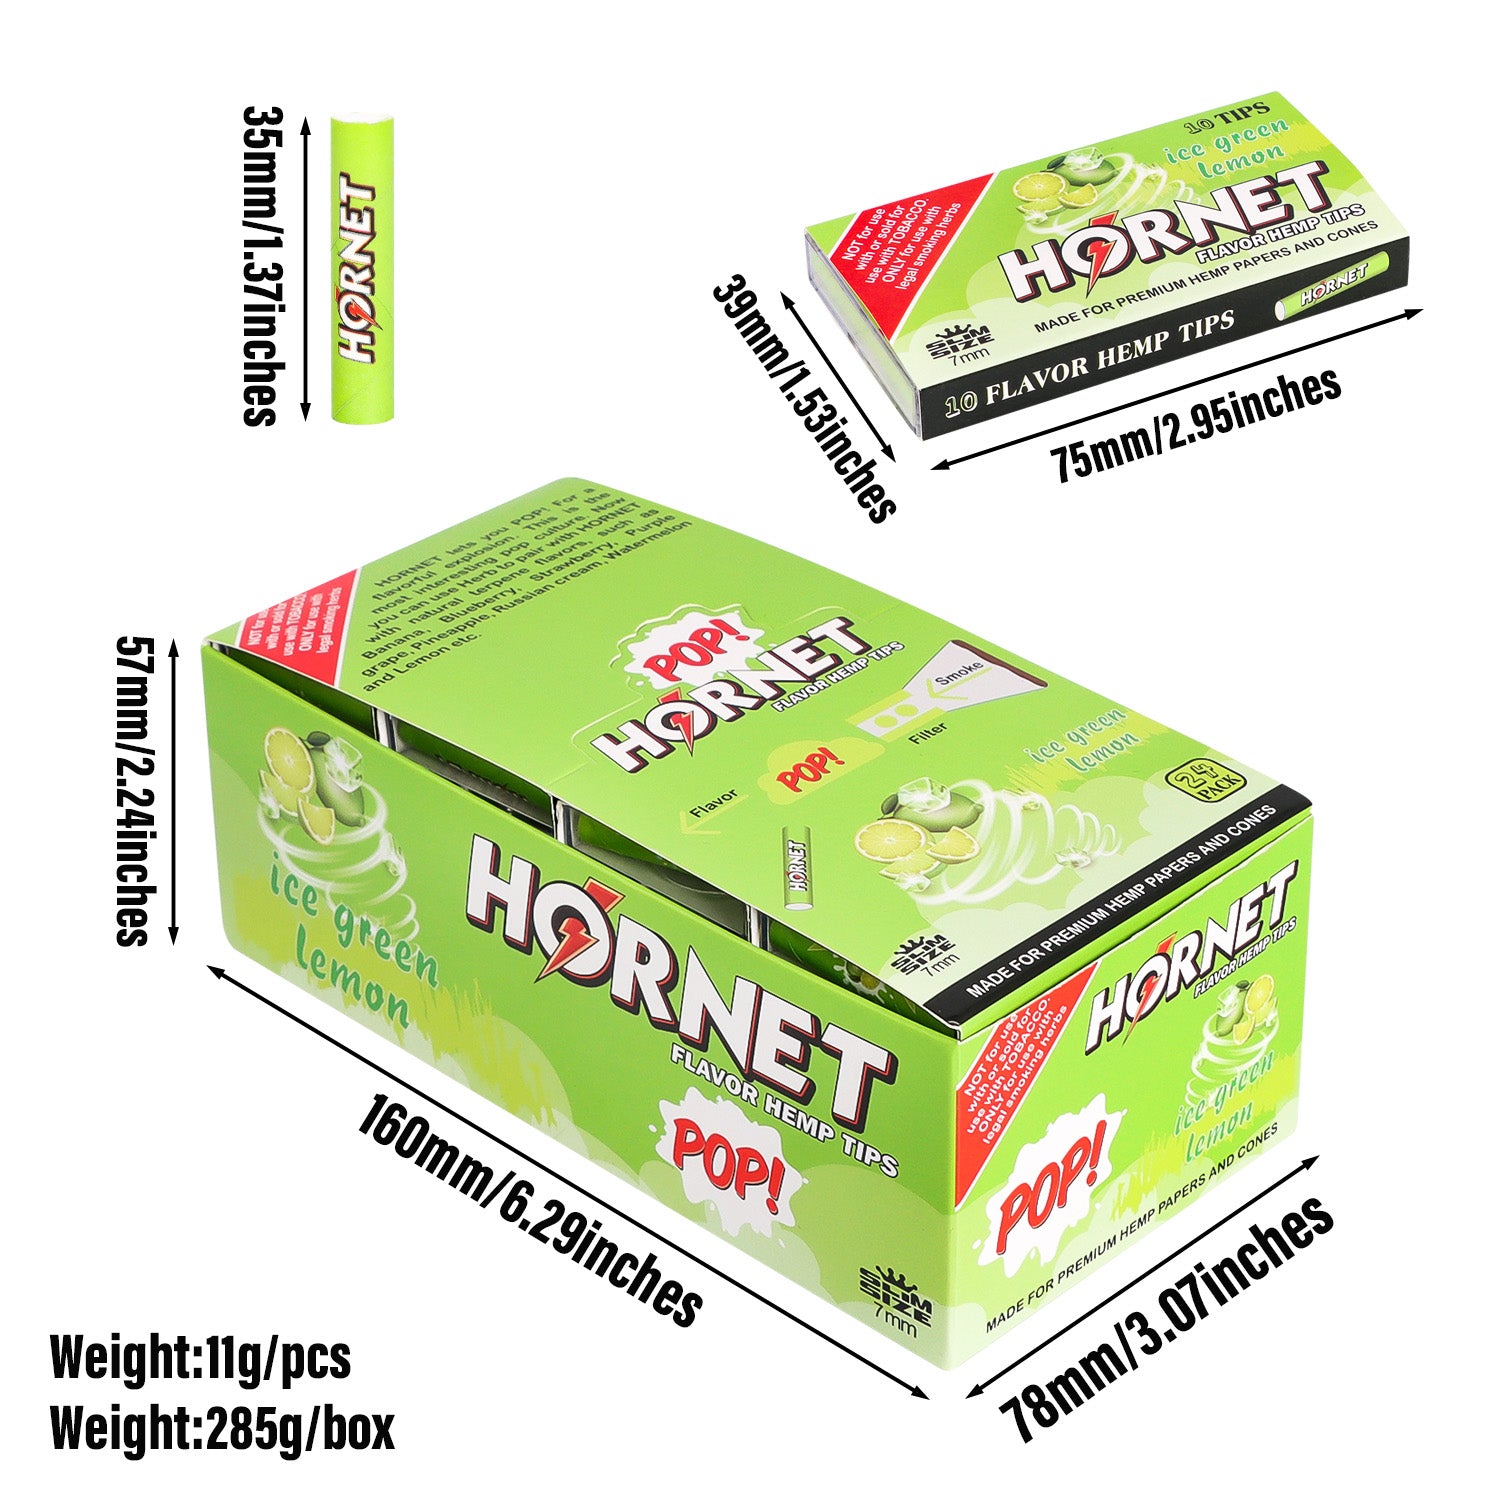 HORNET Green Lemon Flavor Filter Tips with Flavored Pop, 7 mm Filter Tips, 10 Tips / Pack 24 Packs / Box